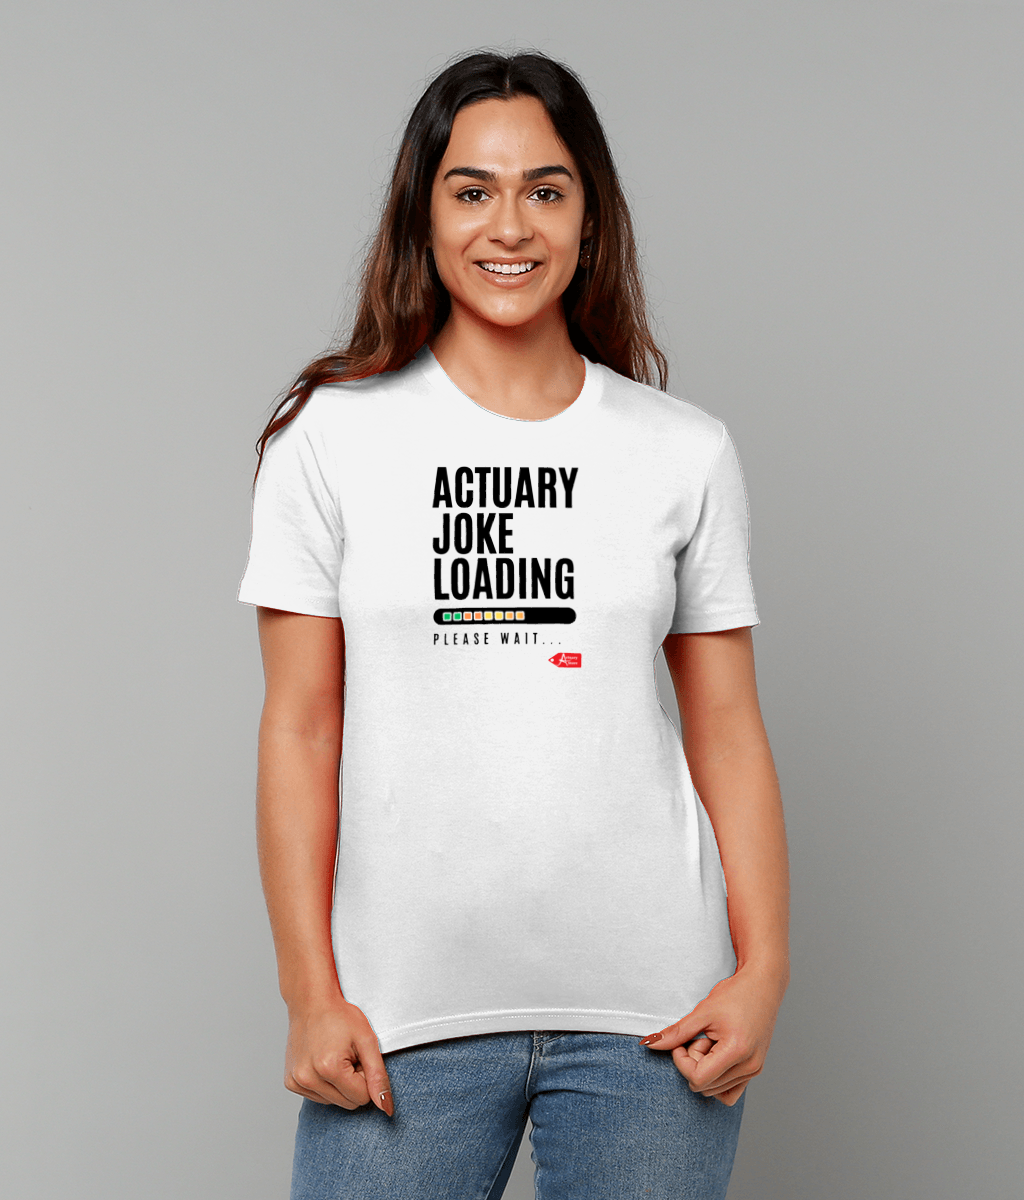 Actuary Joke Loading Please Wait T-shirt